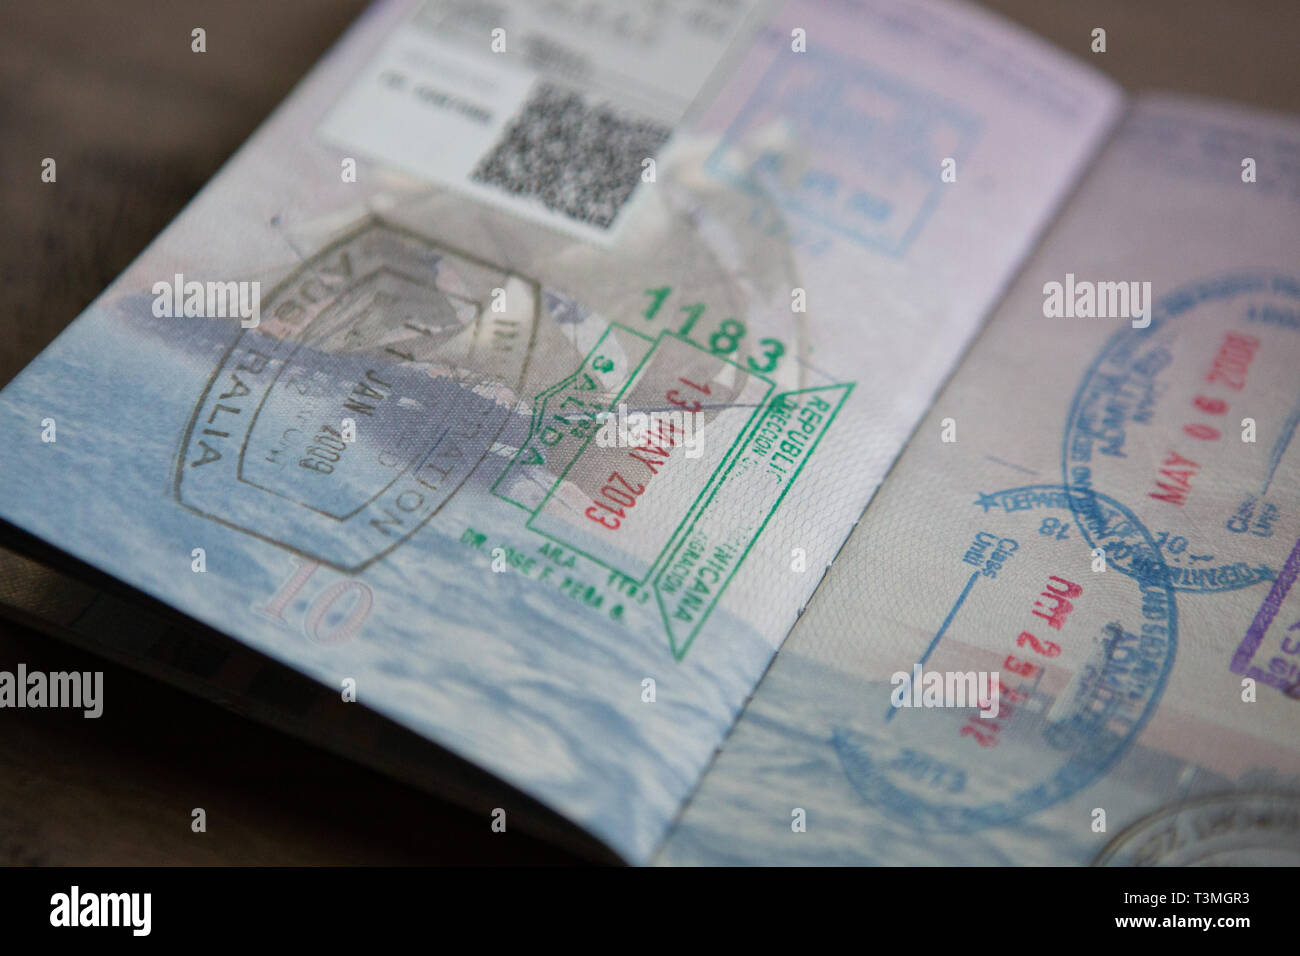 United States of America Passport Stock Photo